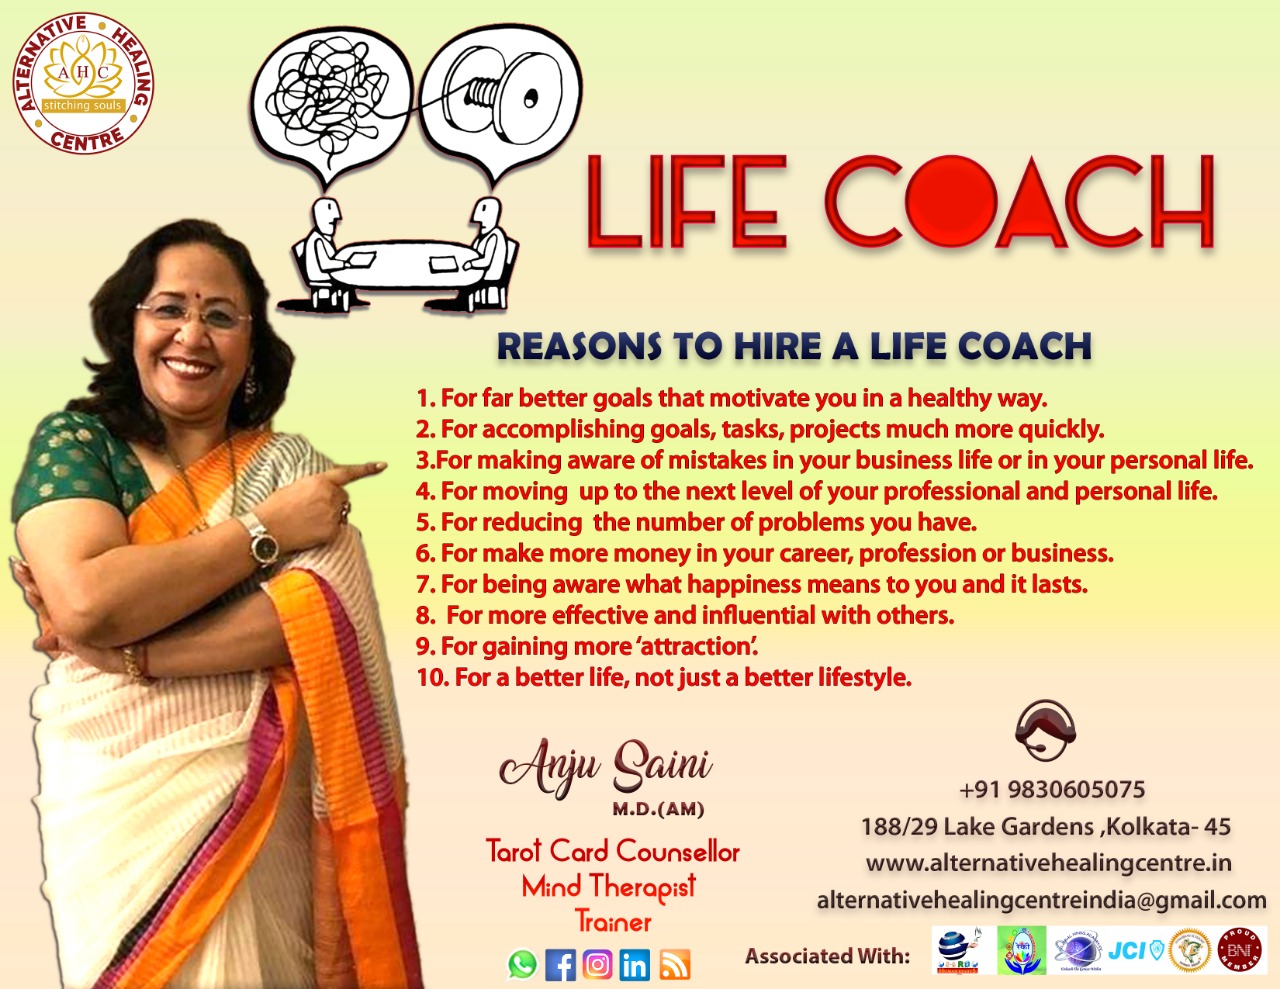 Life Coaching Sessions by Anju Saini - Melbourne